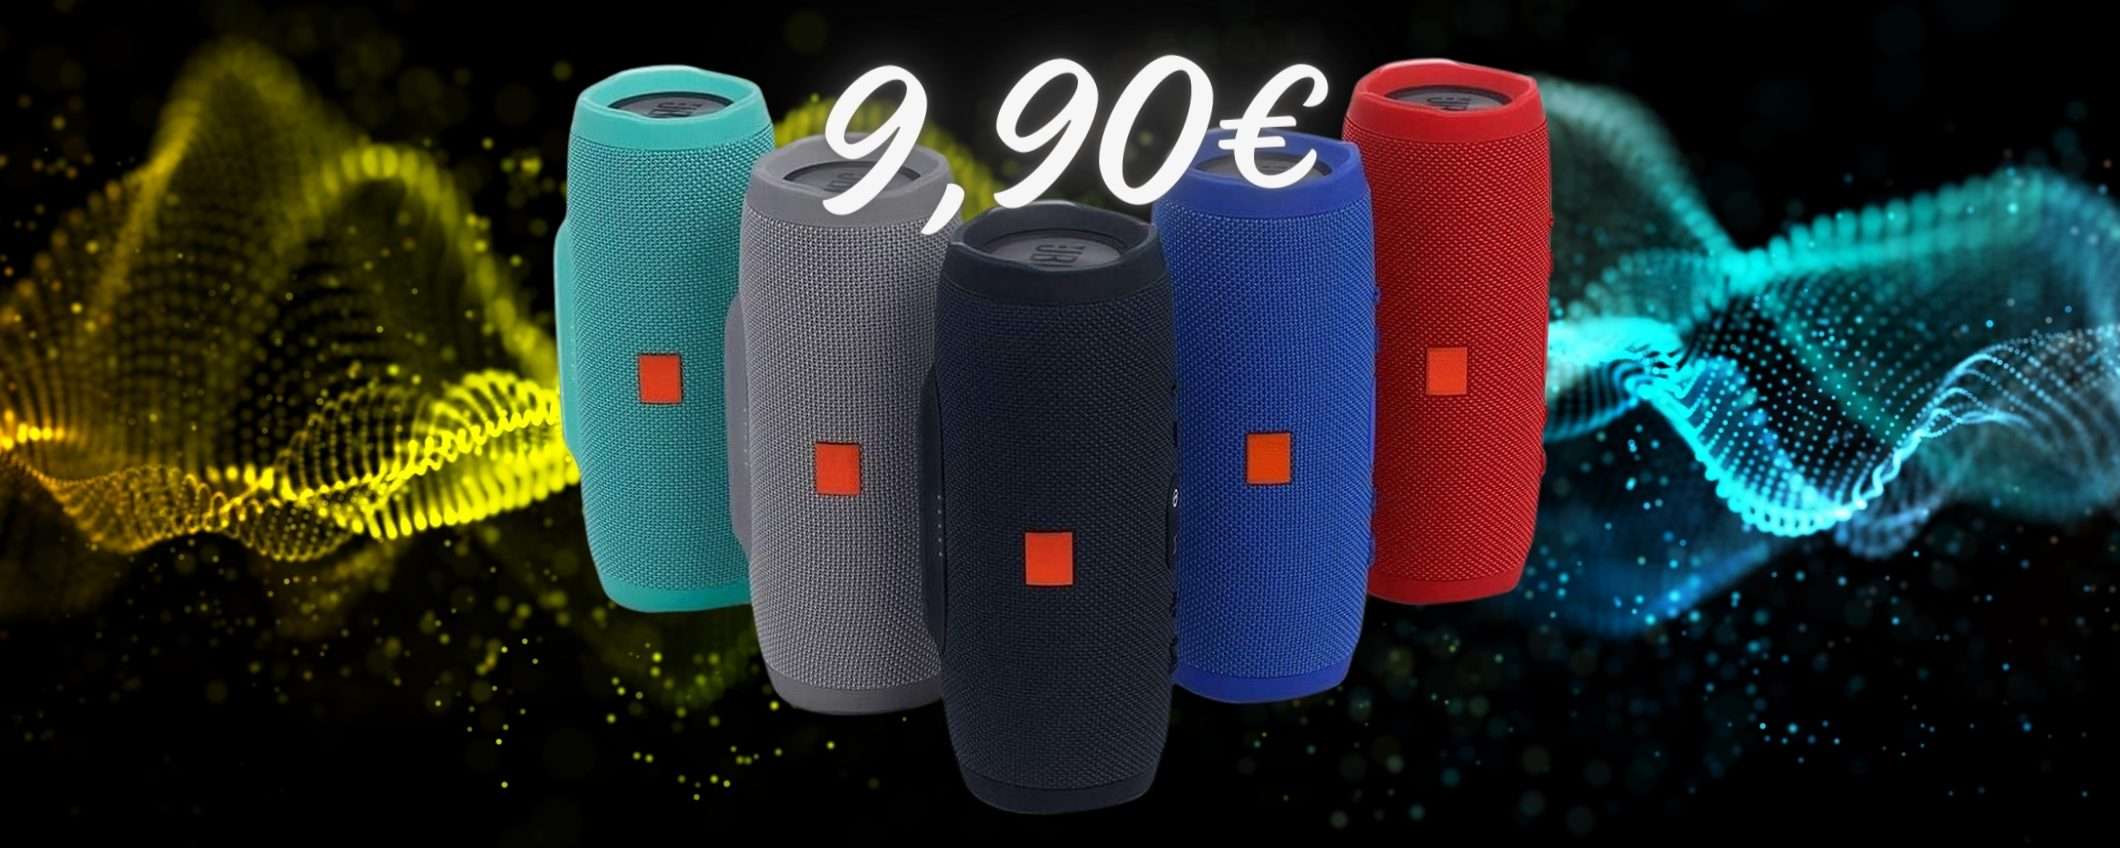 Speaker Bluetooth portatile con APPENA 9,90€: FOLLE OFFERTA di eBay